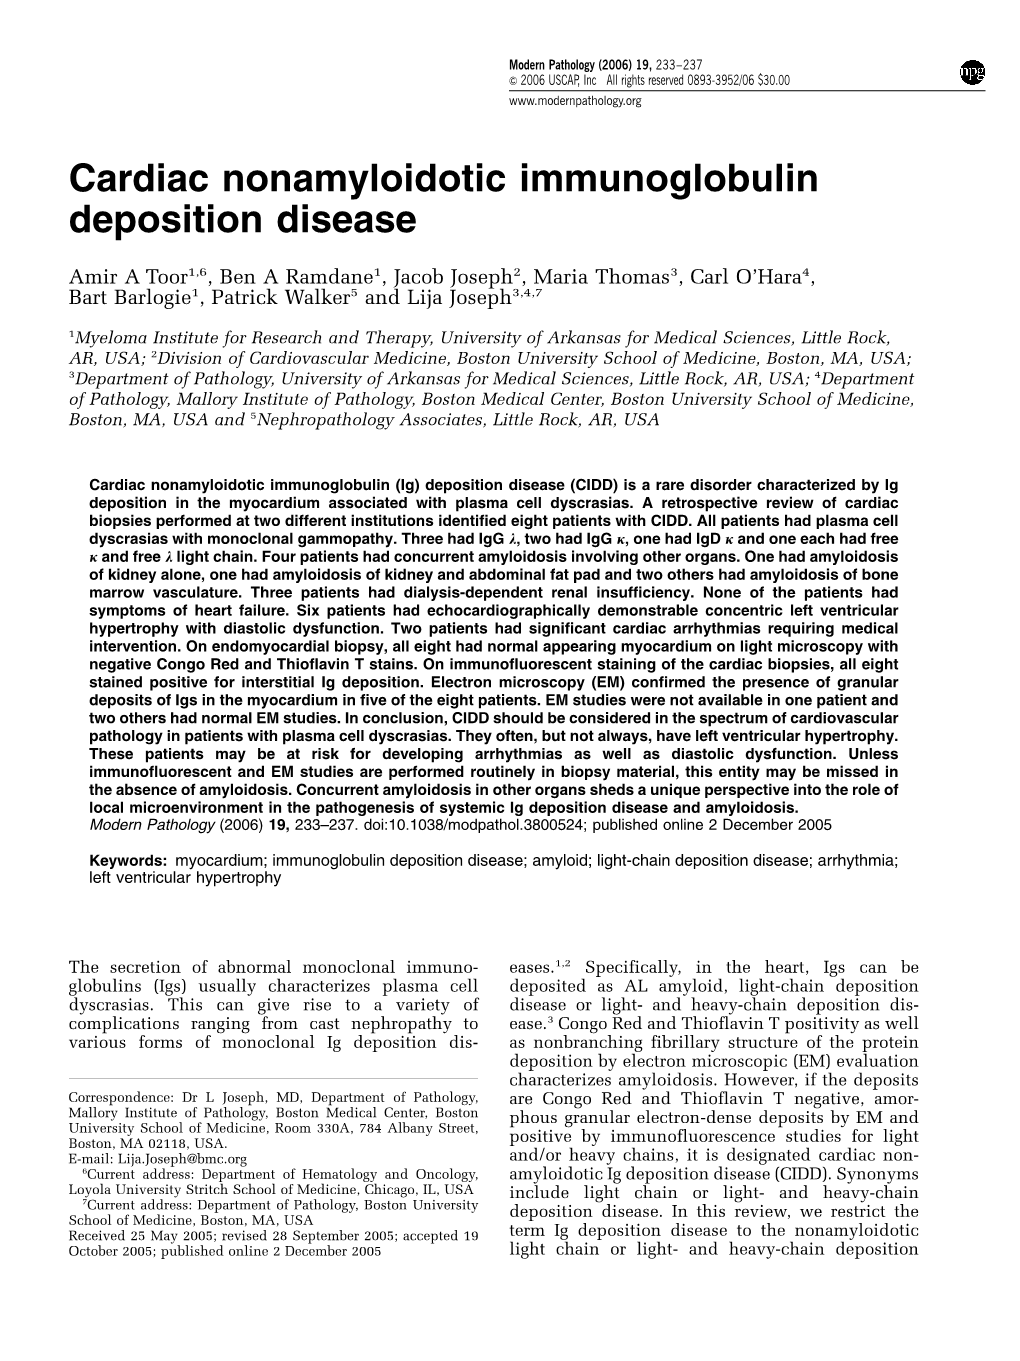 Cardiac Nonamyloidotic Immunoglobulin Deposition Disease